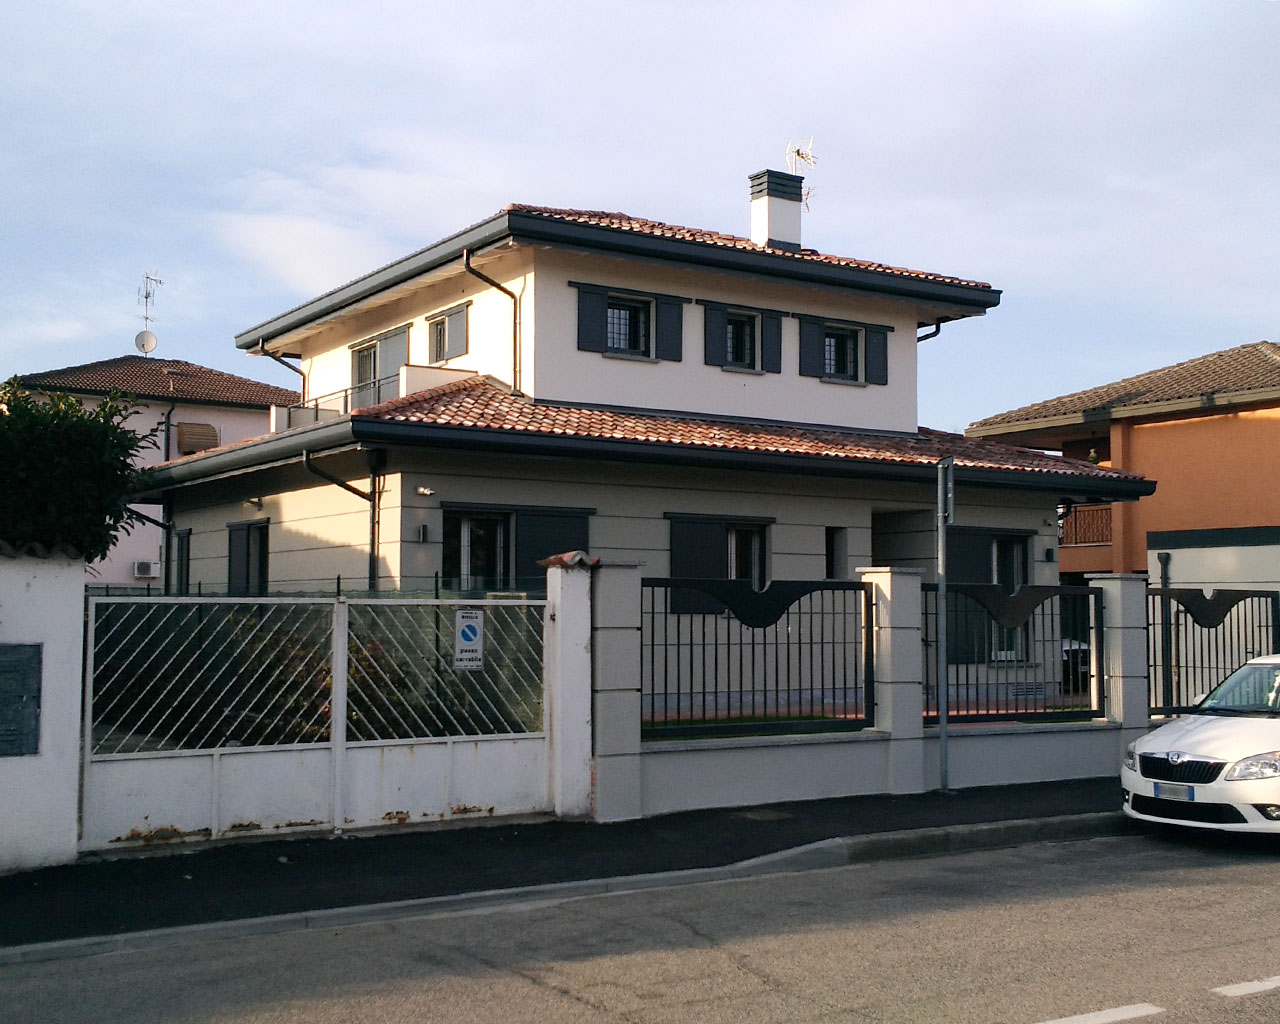 Residenza unifamiliare Santa Corinna, Noviglio (MI)